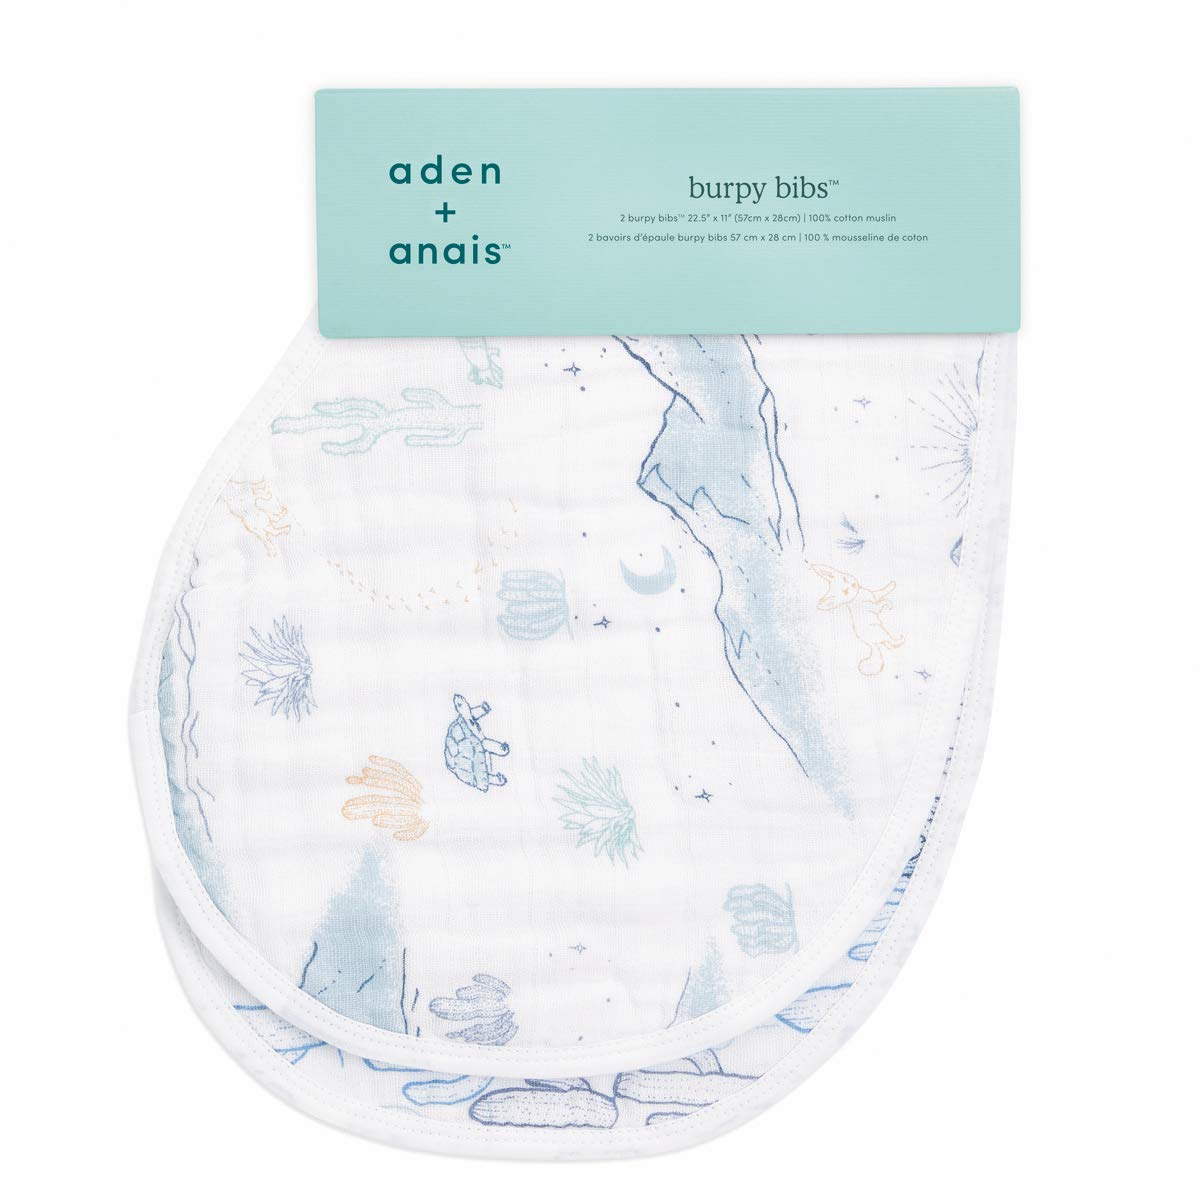 aden + anais Burpy Bib, 100% Cotton Muslin, Soft Absorbent 4 Layers, Multi-Use Burp Cloth and Bib, 22.5" X 11", 2 Pack, Trail Bloom Llamas